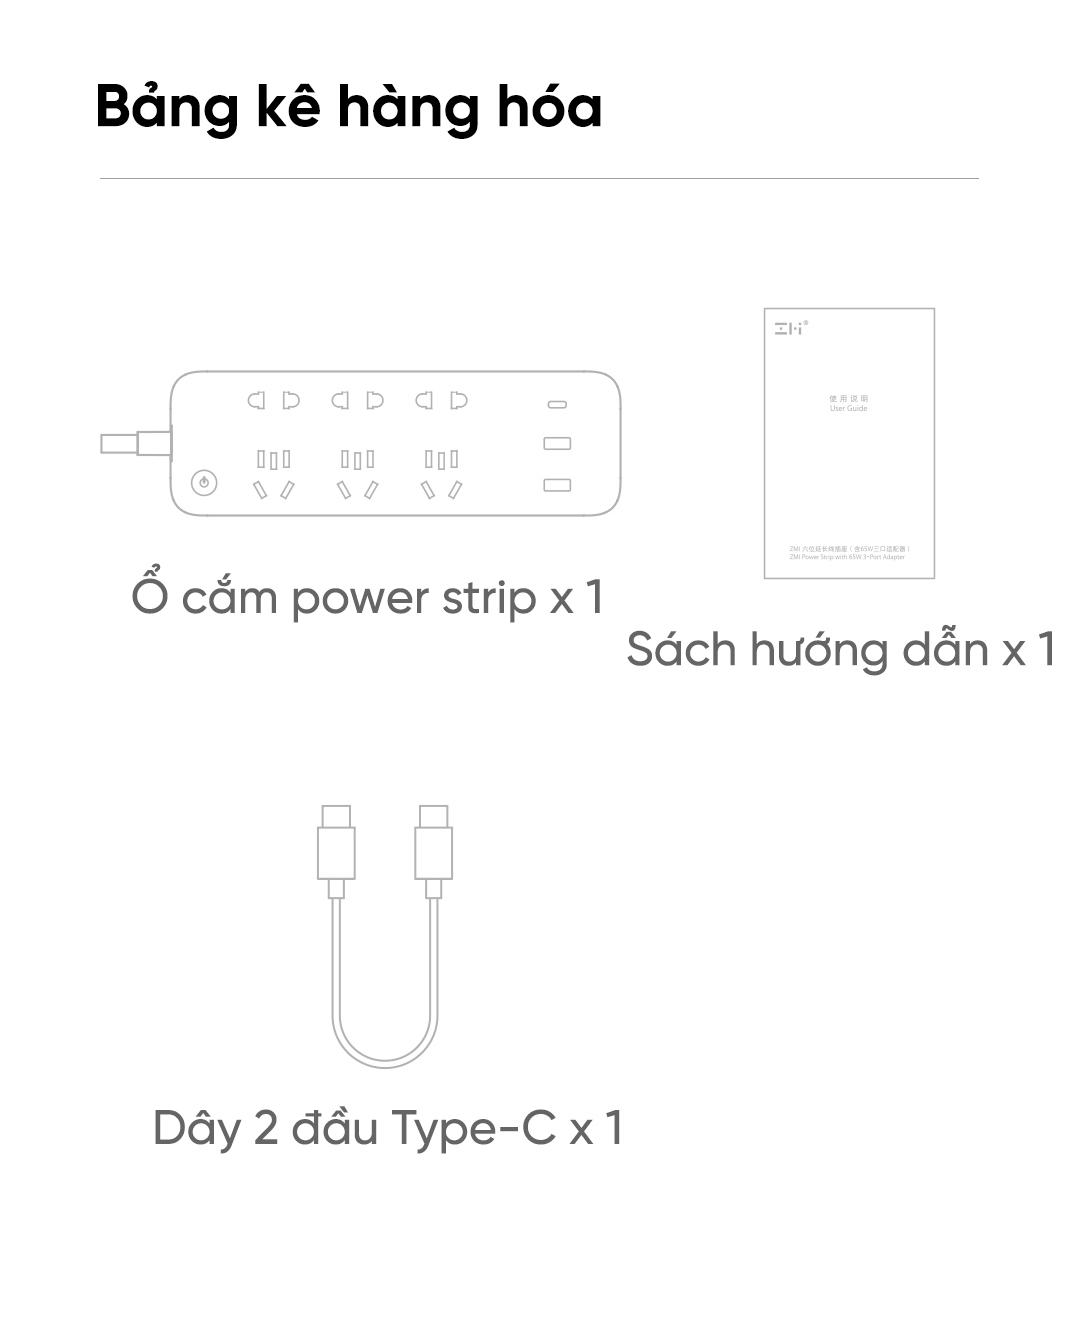 Ổ cắm Xiaomi Power Strip ZMI 65W CXP01